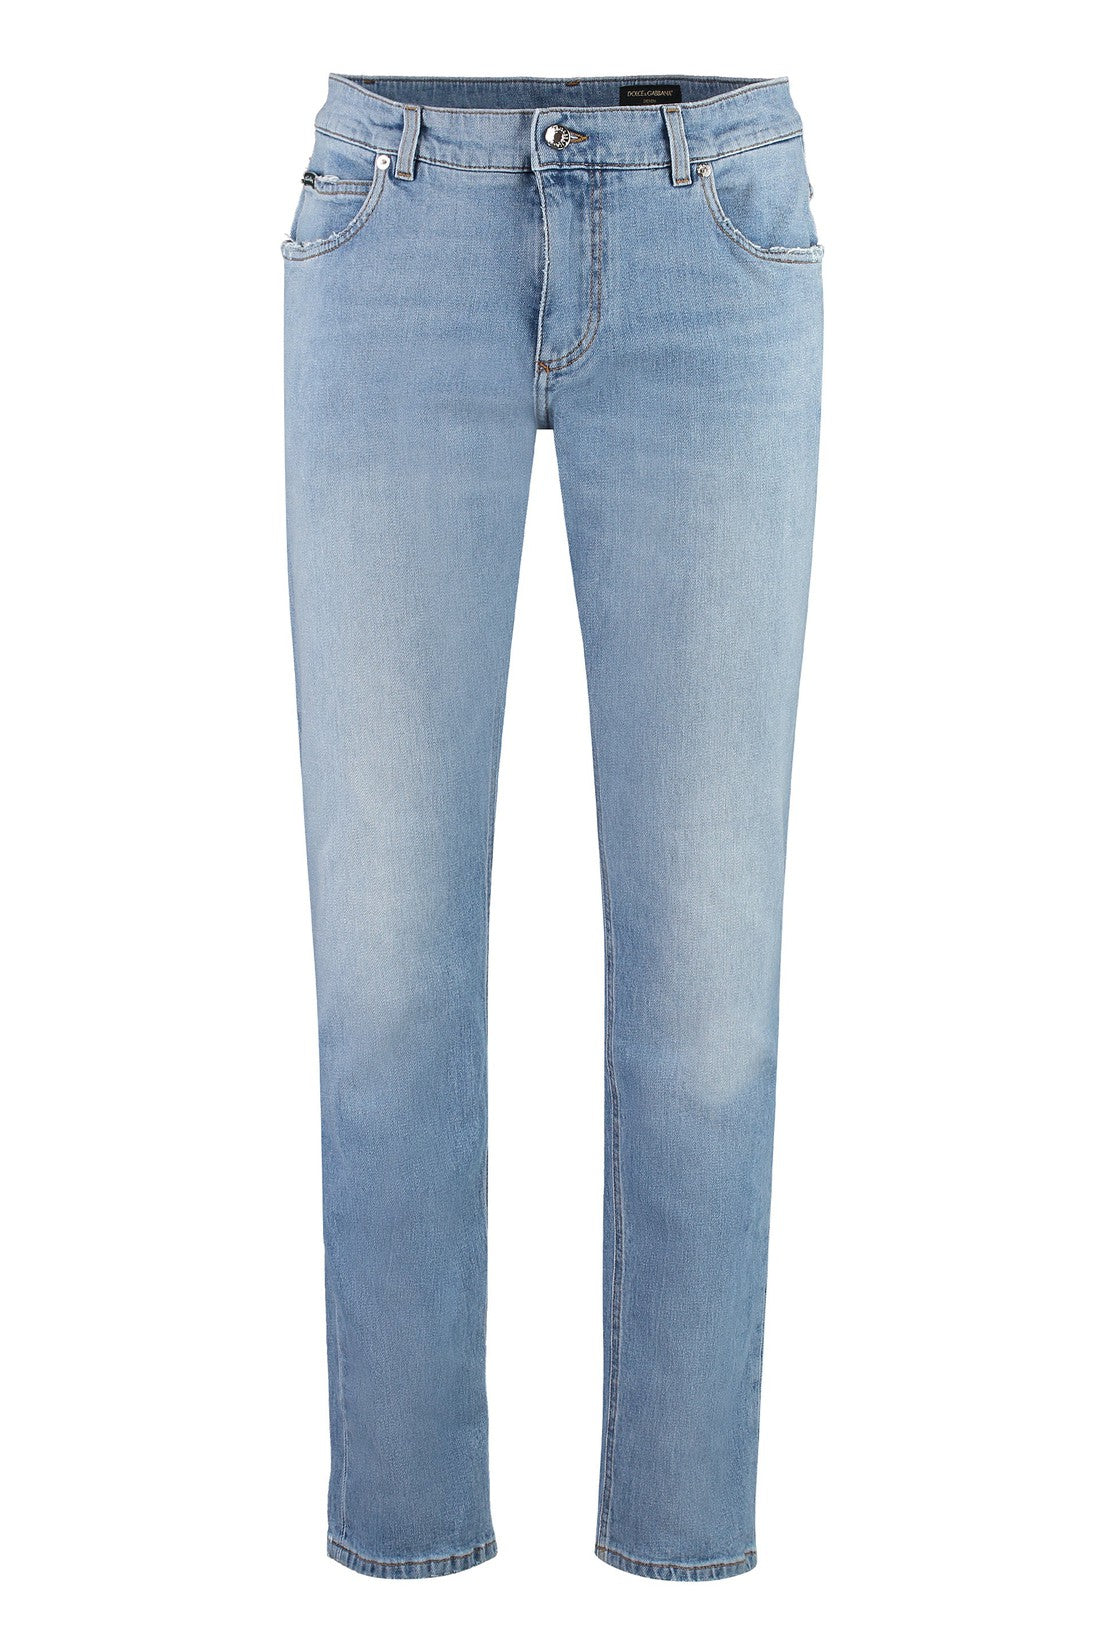 Dolce & Gabbana-OUTLET-SALE-5-pocket straight-leg jeans-ARCHIVIST